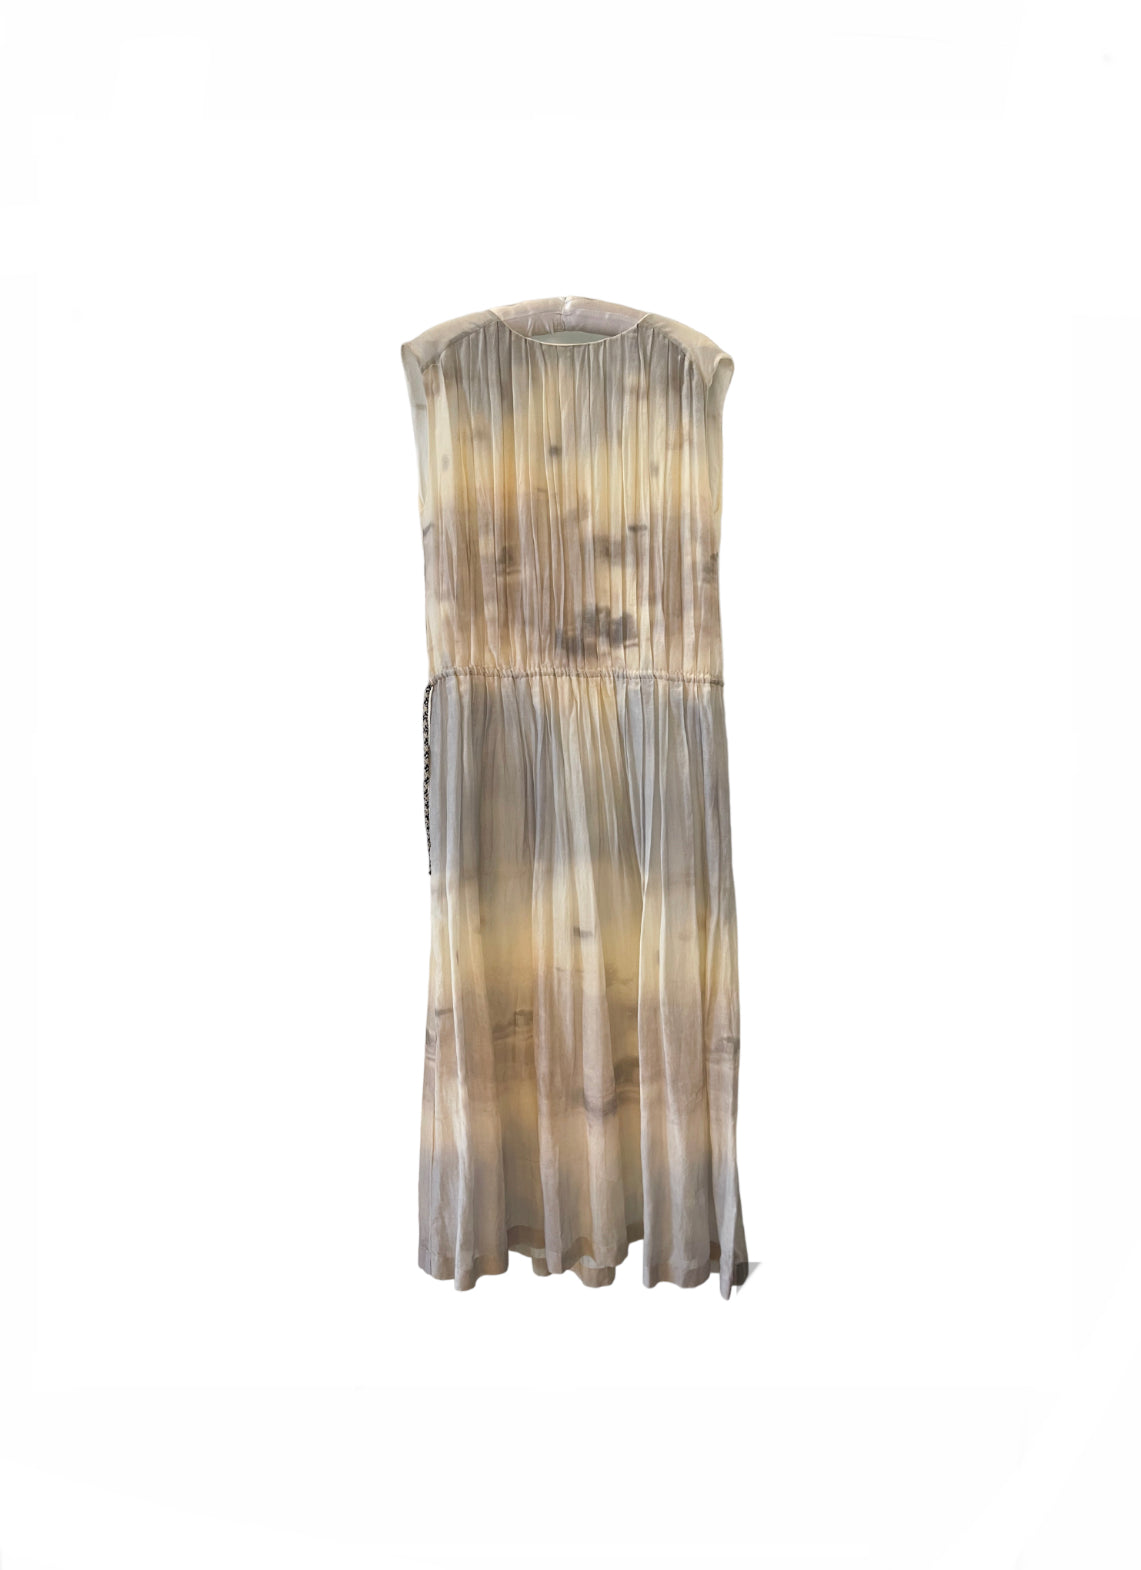 Pomandere Silk/Cotton Dress